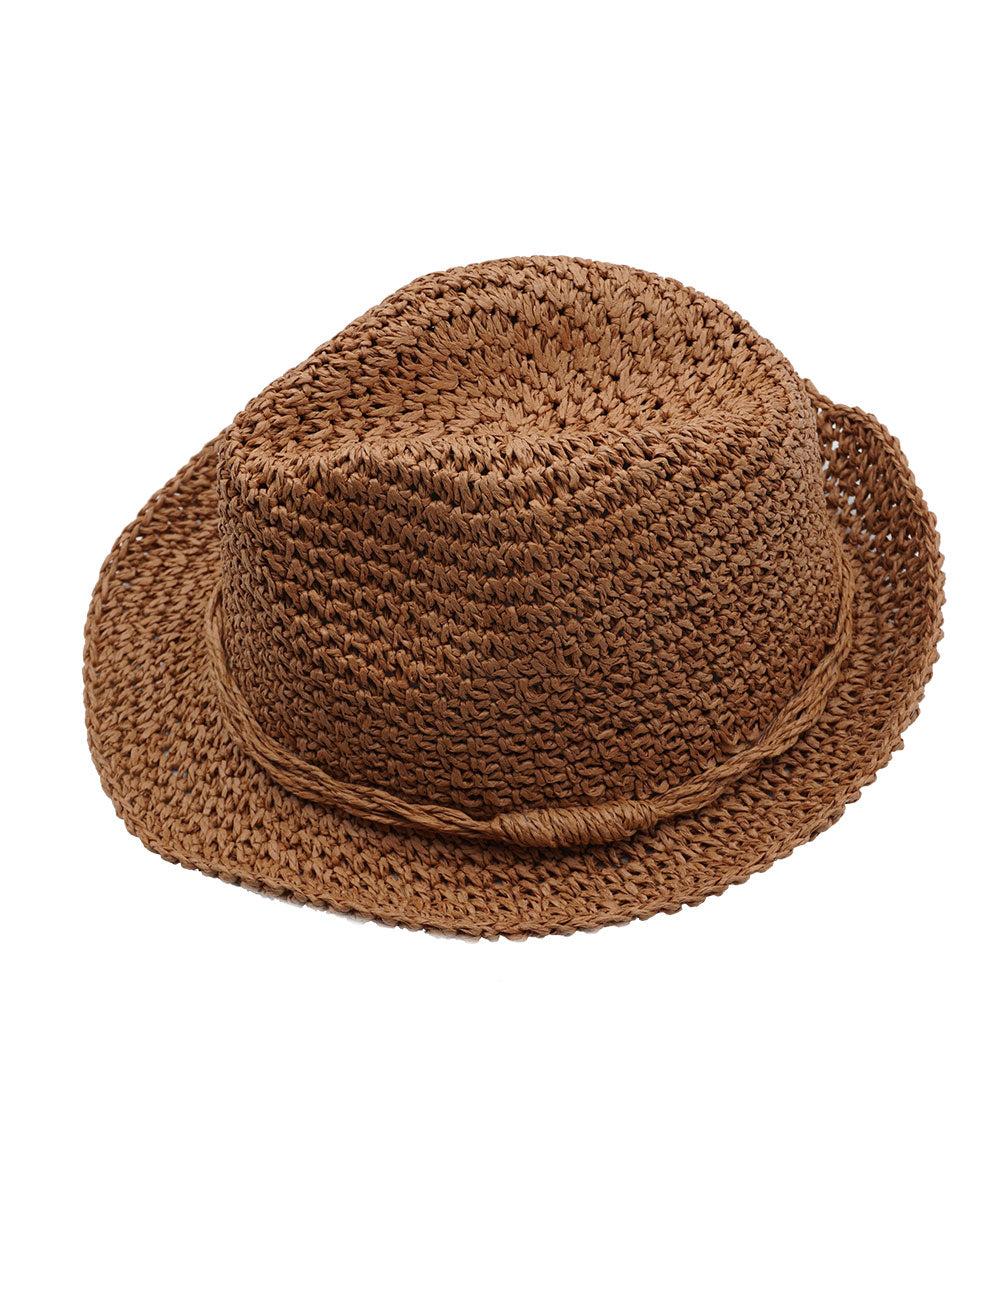 Maximo - Children's hat brown